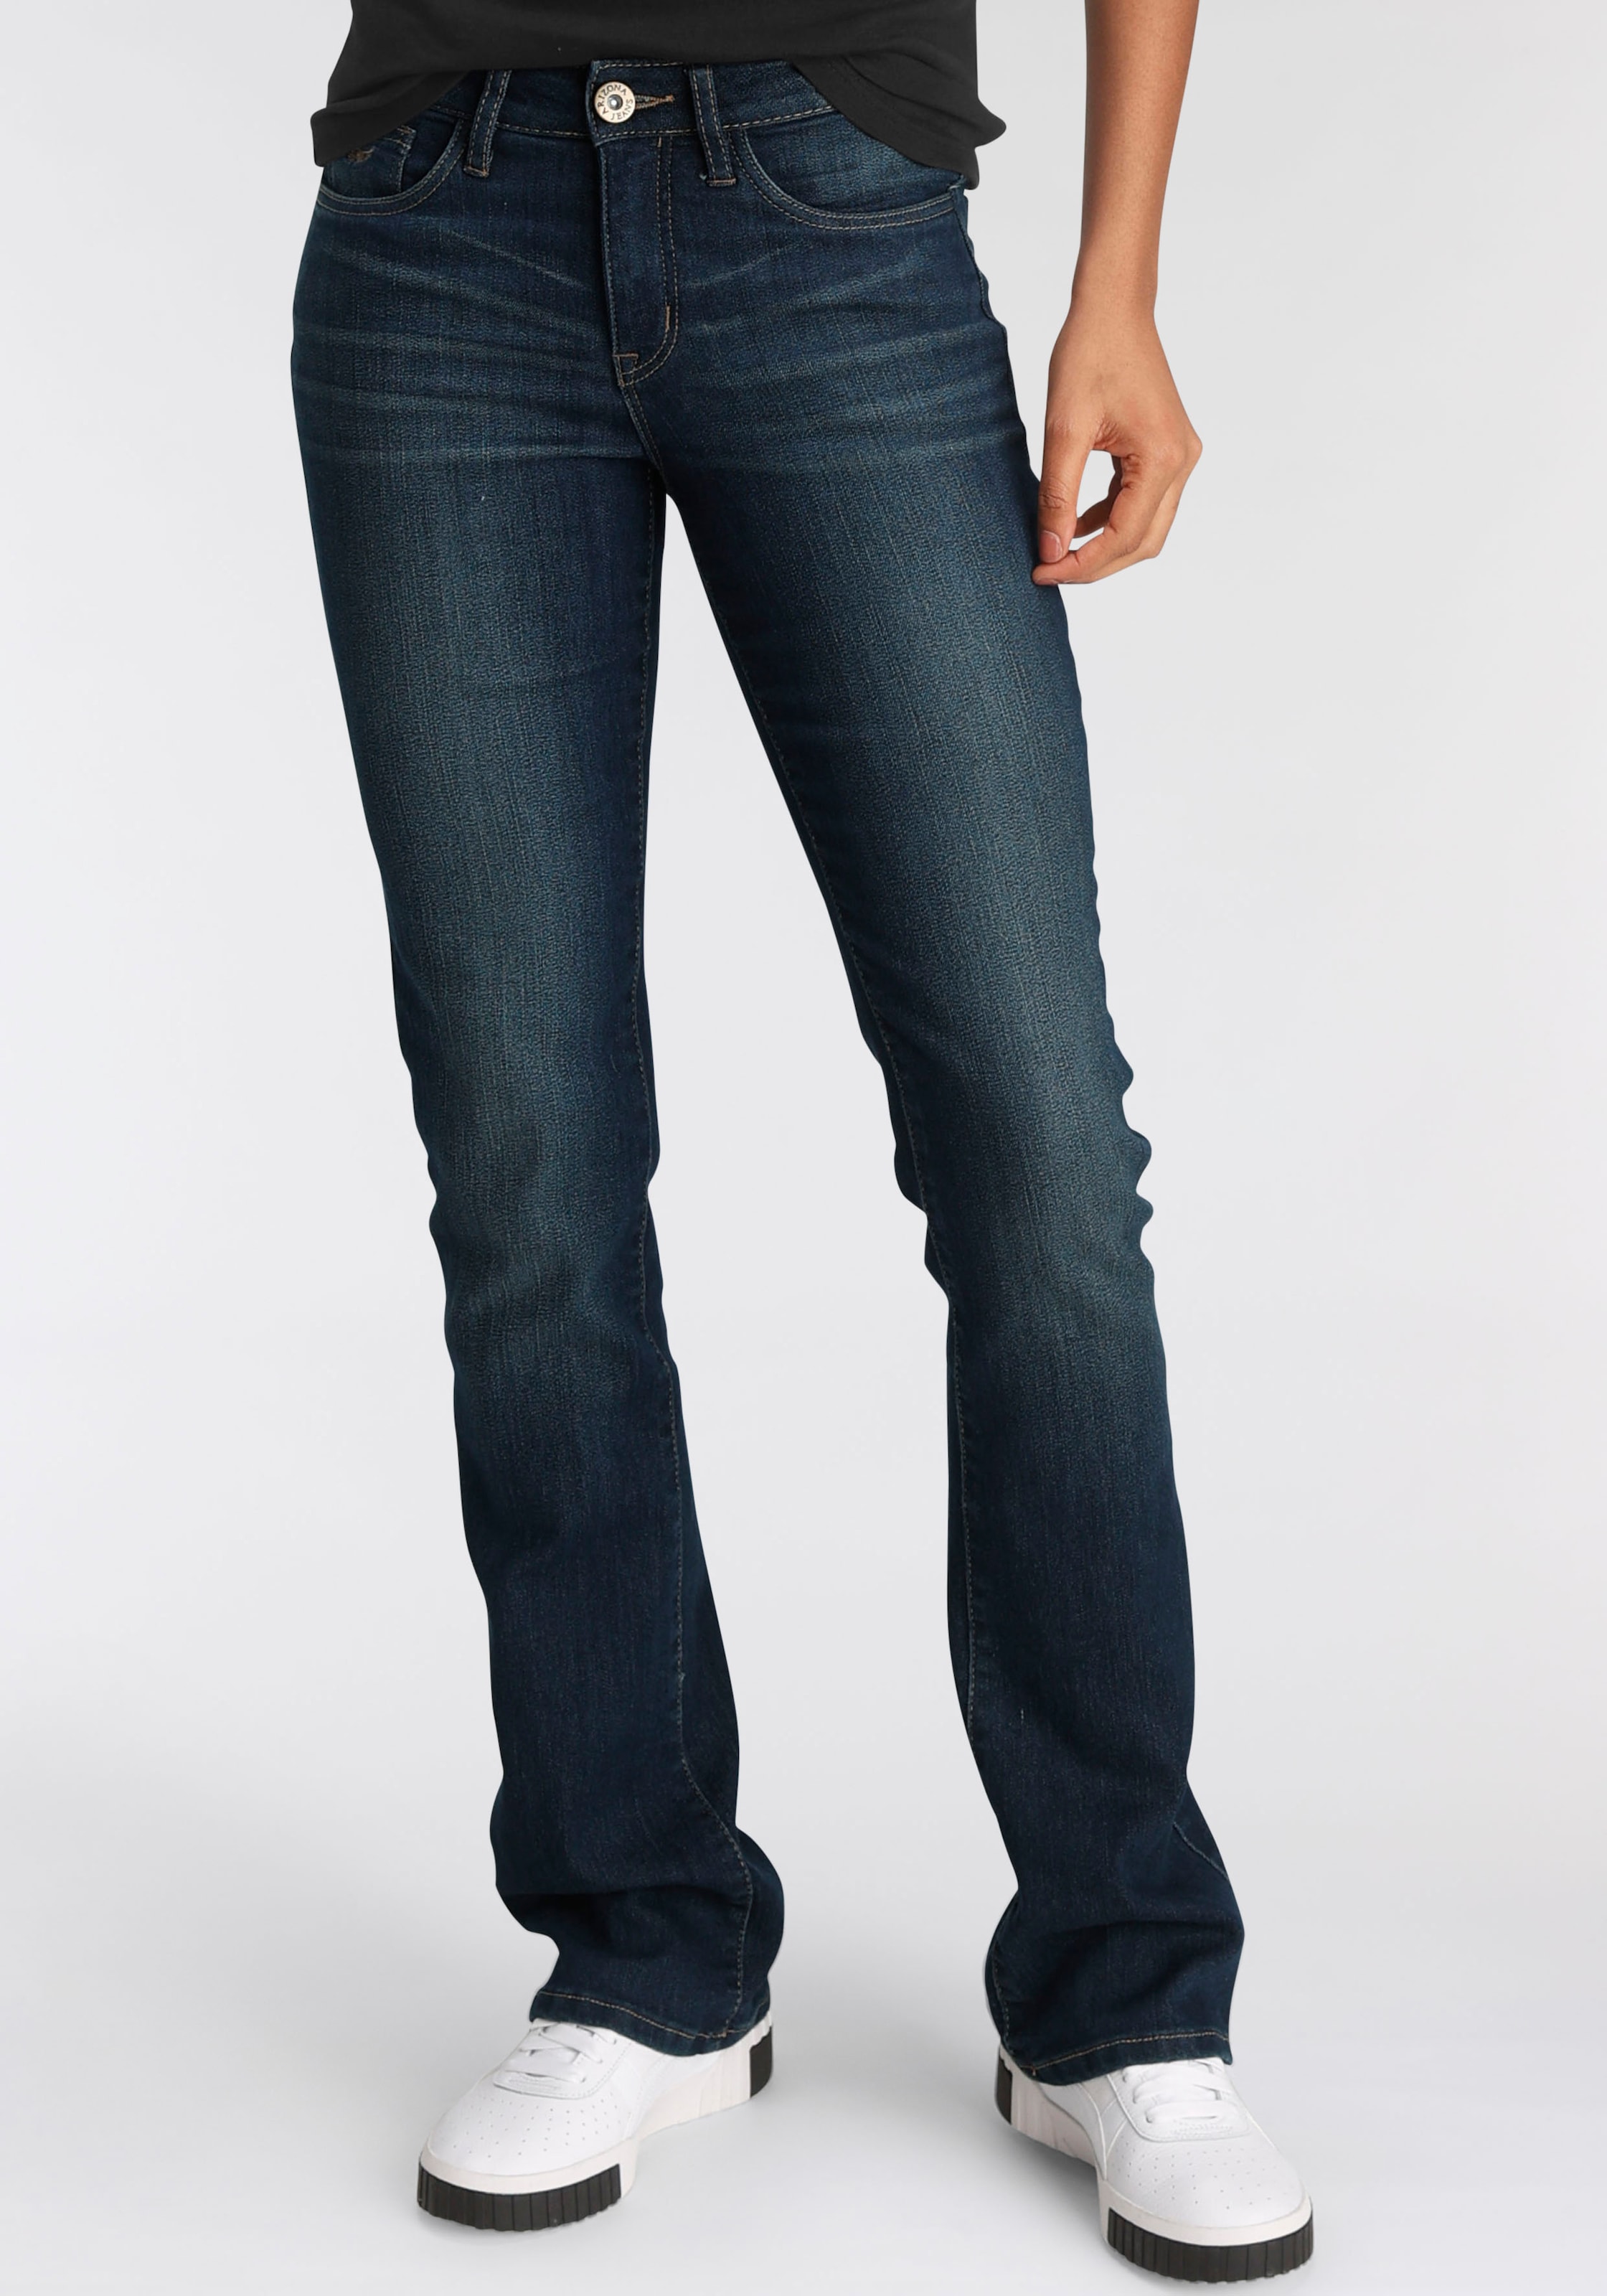 NEU Damen Hose Weiß Stretch Denim L30 Slim Arizona Jeans Röhre Kurz-Gr.18 36 